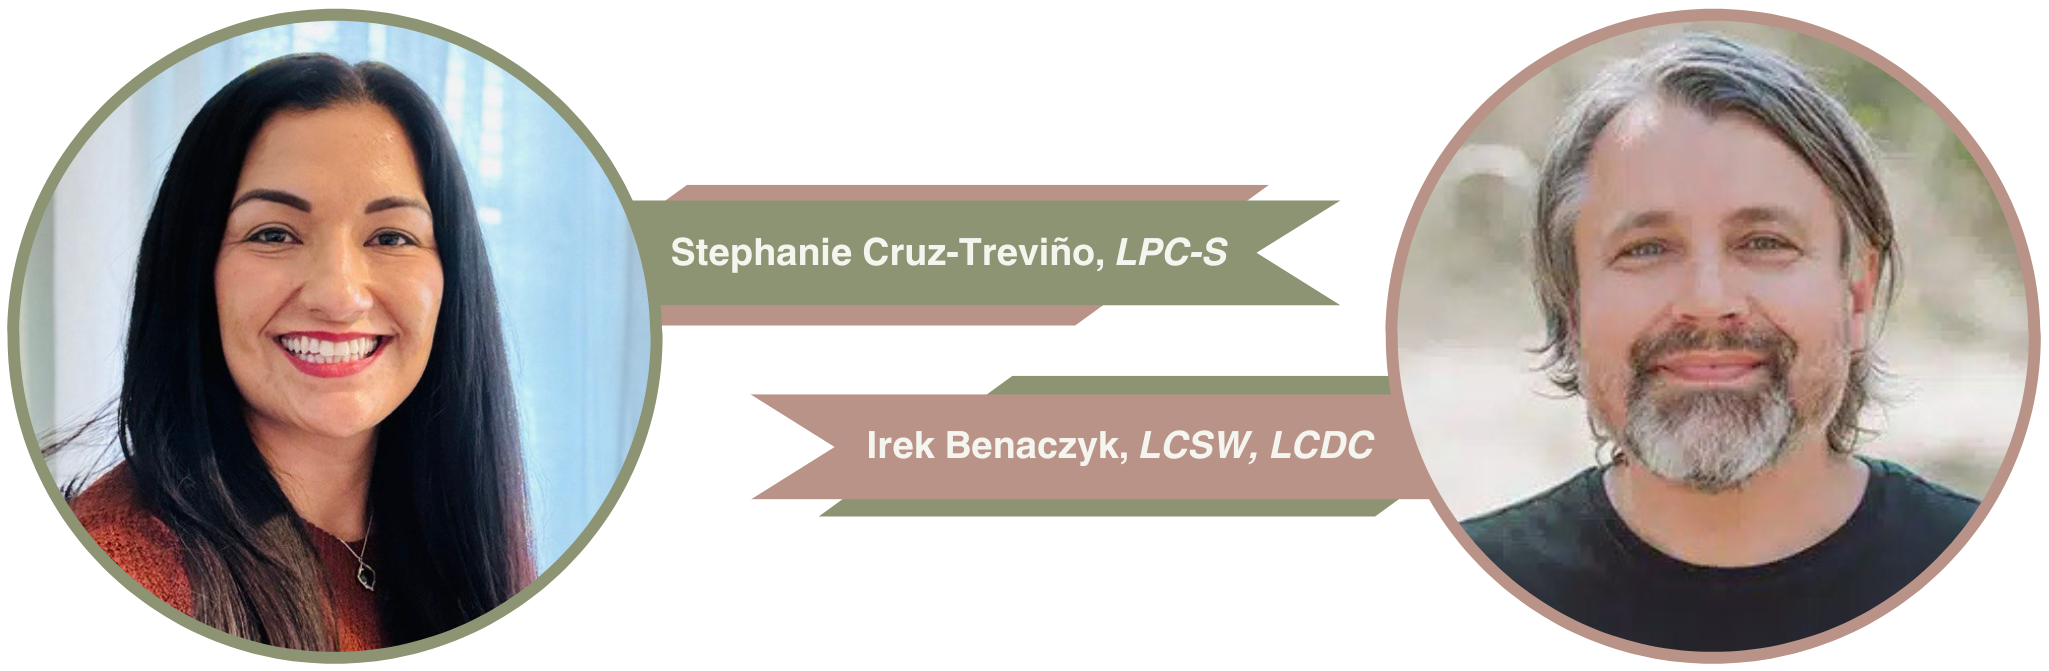 Stephanie Cruz-Trevino LPC-S & Irek Benaczyk, LCSW, LCDC